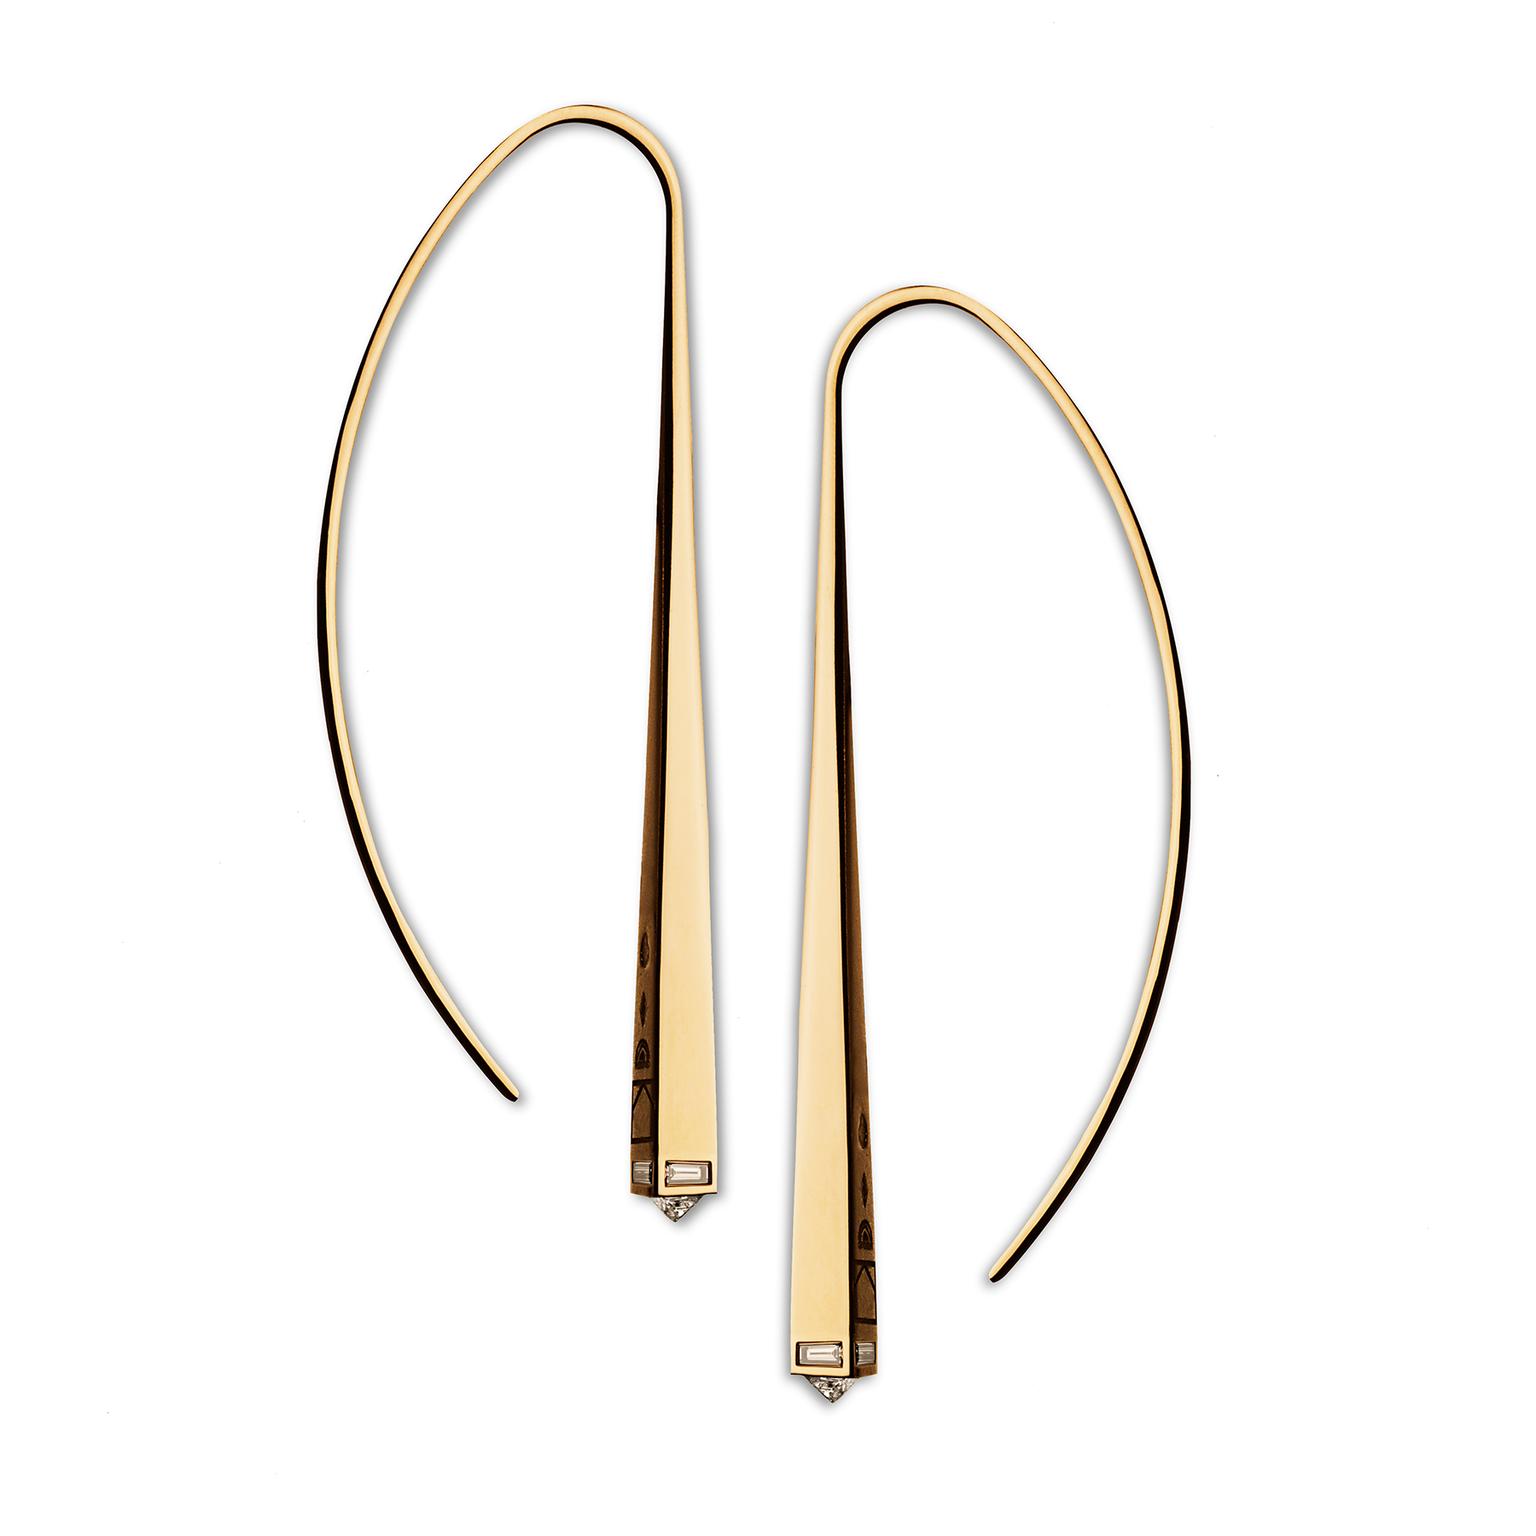 Tejen long diamond capstone Arc earrings in Fairmined gold and diamonds